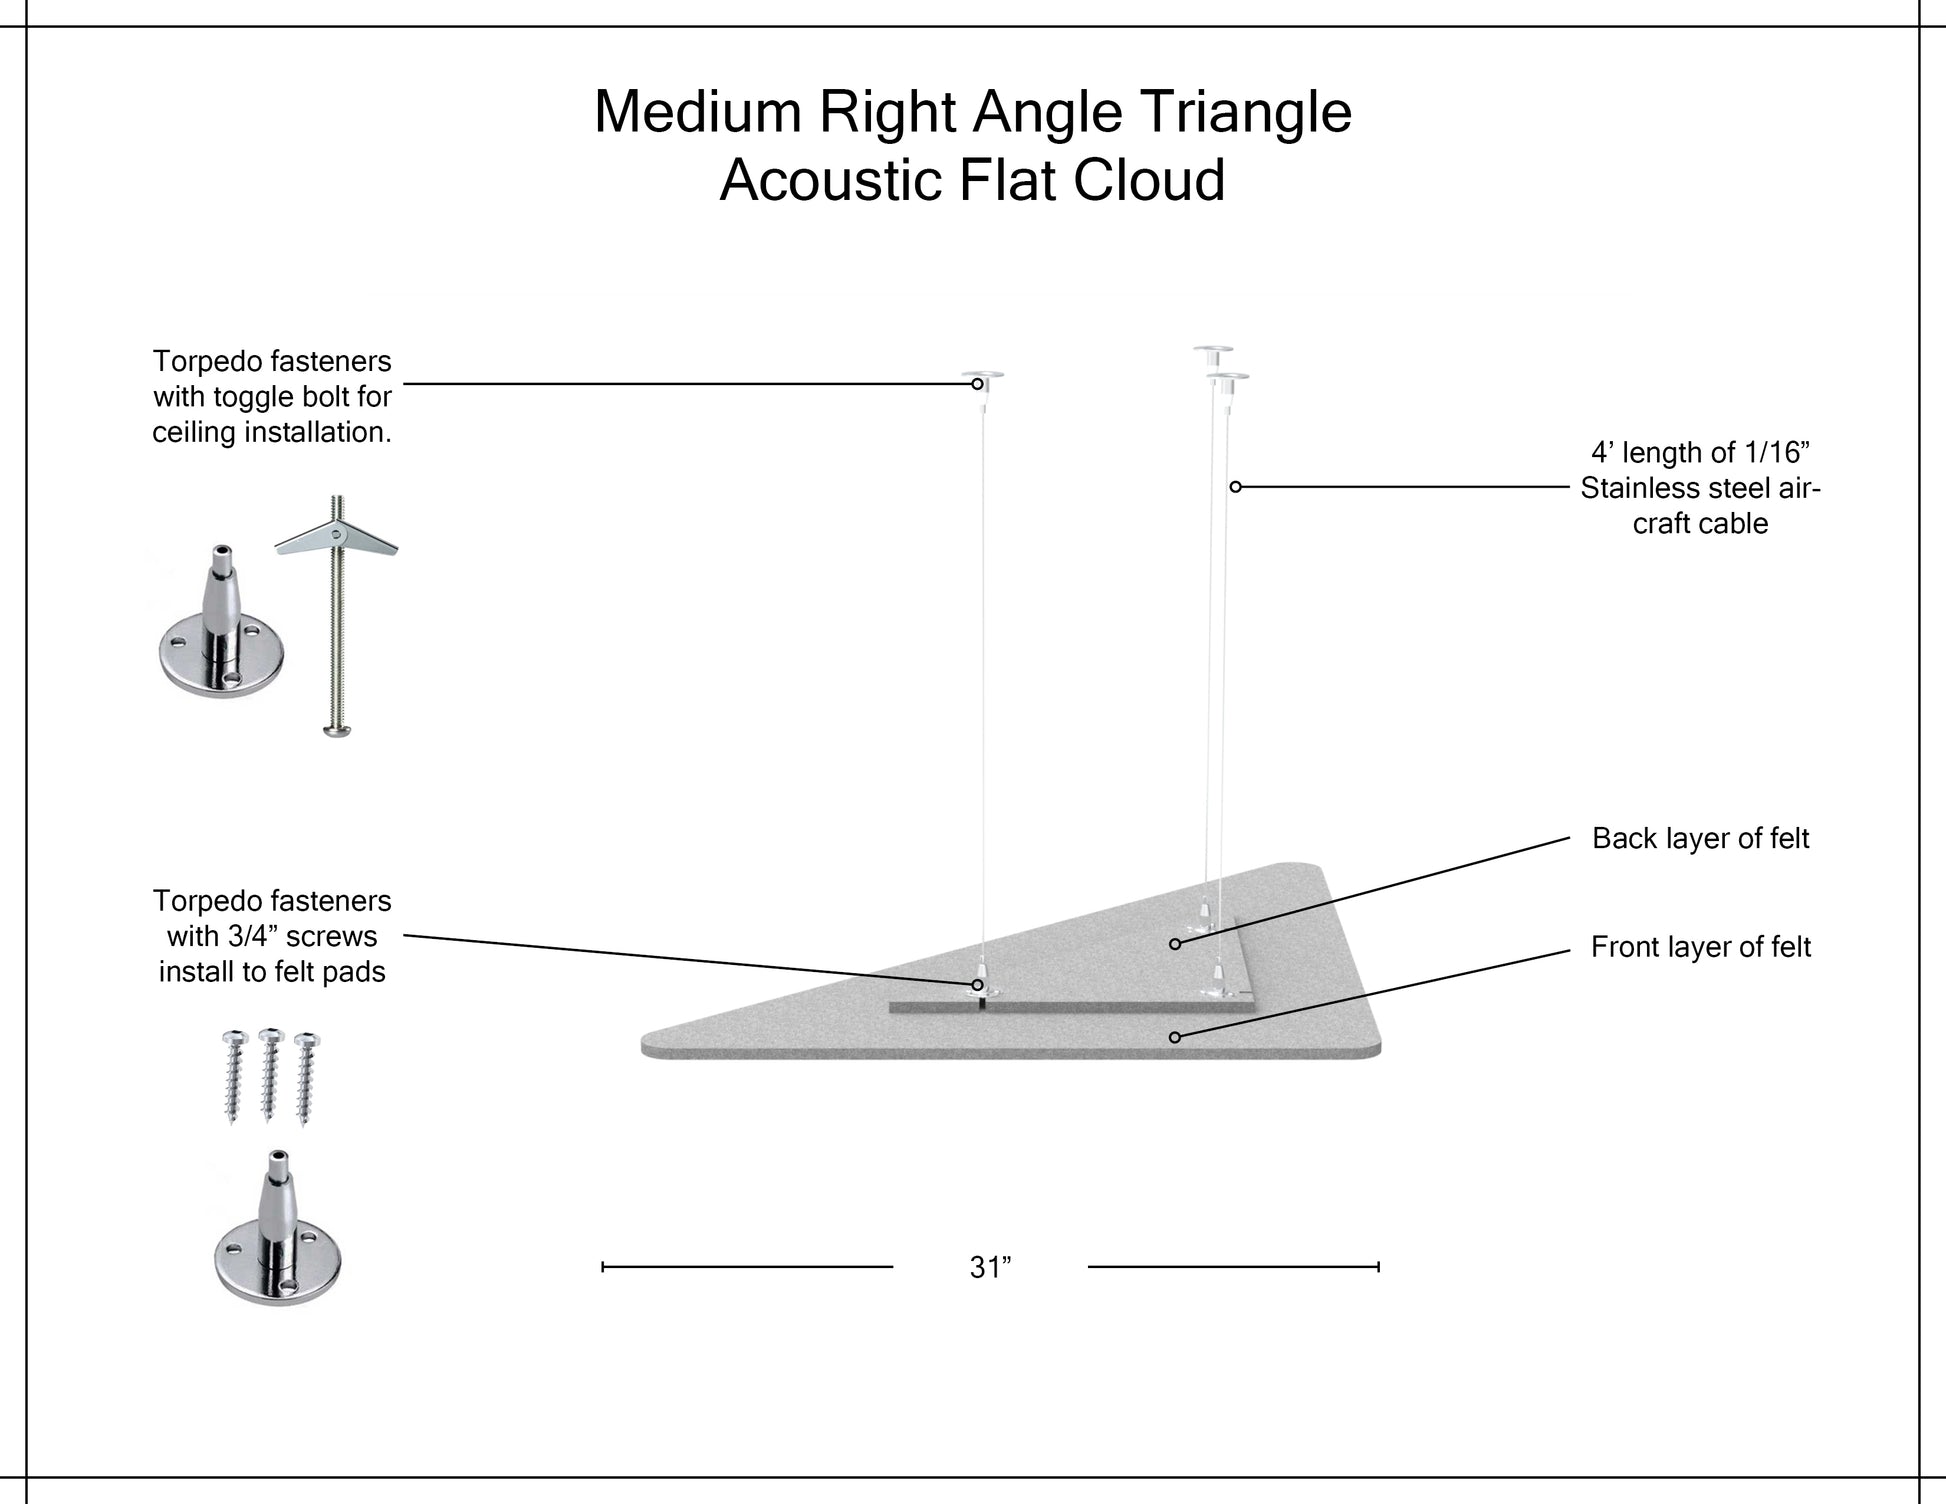 Medium Right Angle Triangle Acoustic Flat Cloud